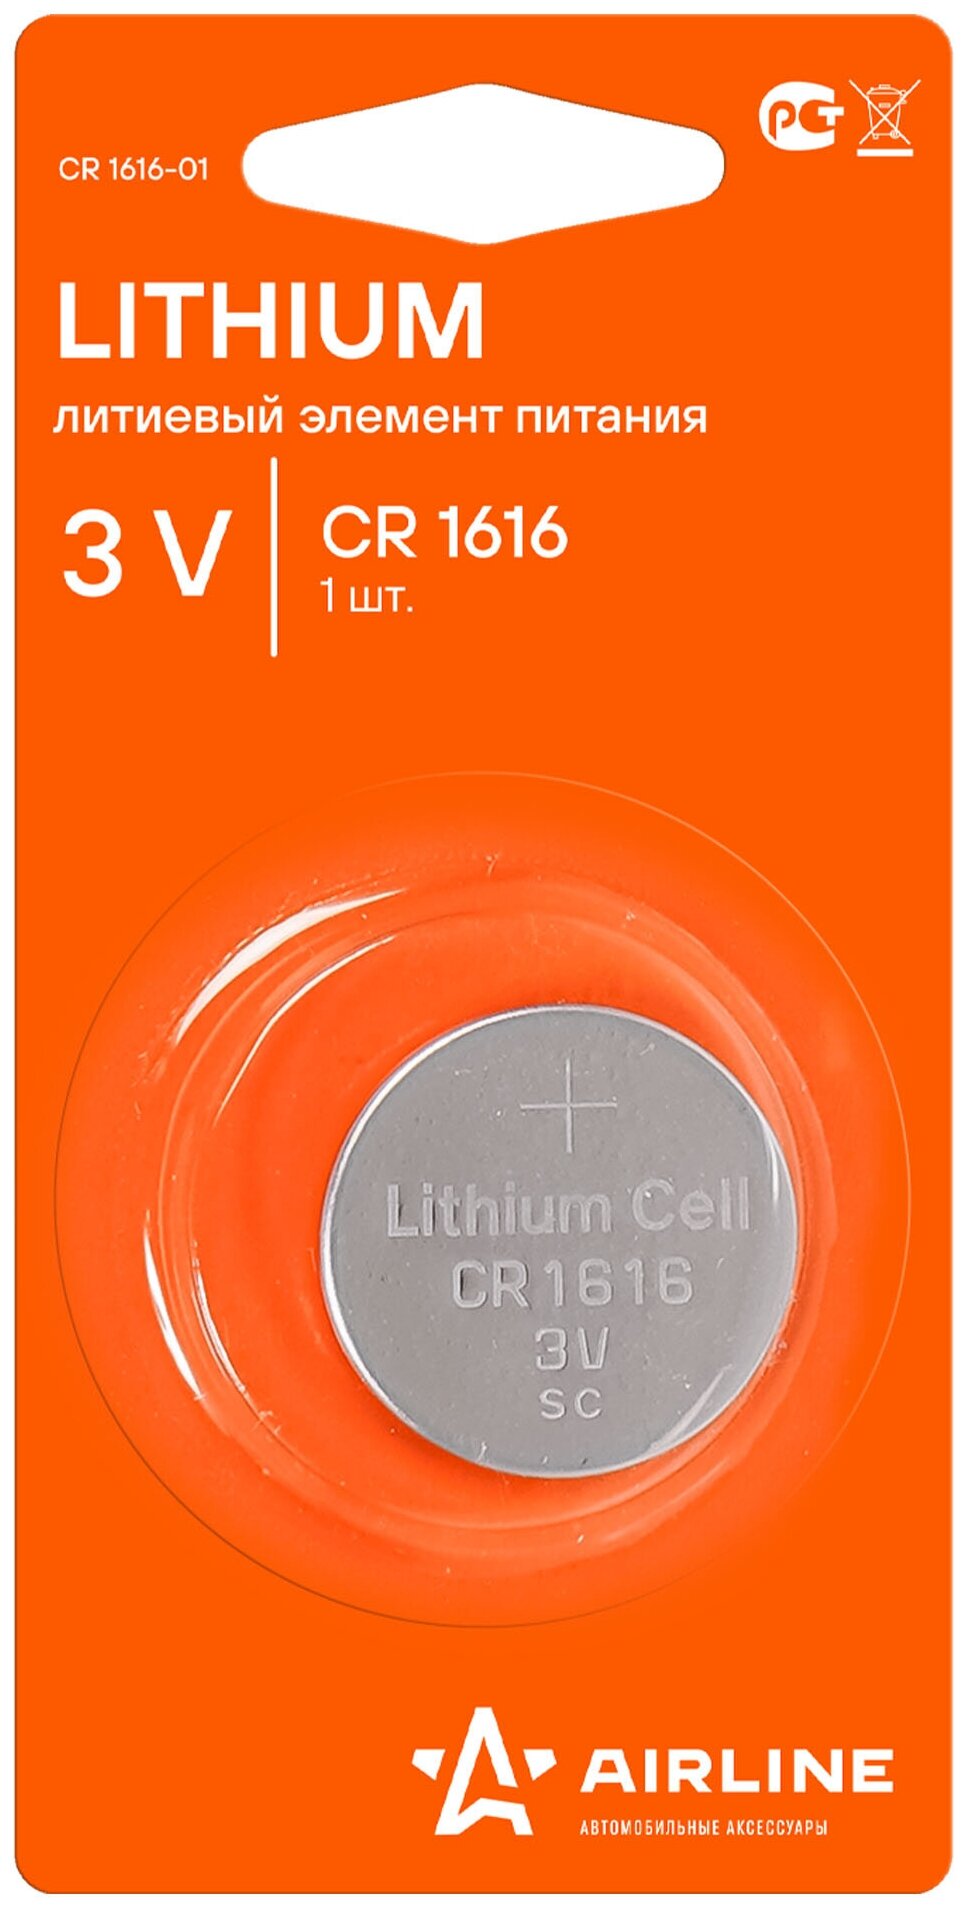 Батарейка CR1616 3V для брелоков сигнализаций литиевая 1 шт. AIRLINE - фото №1